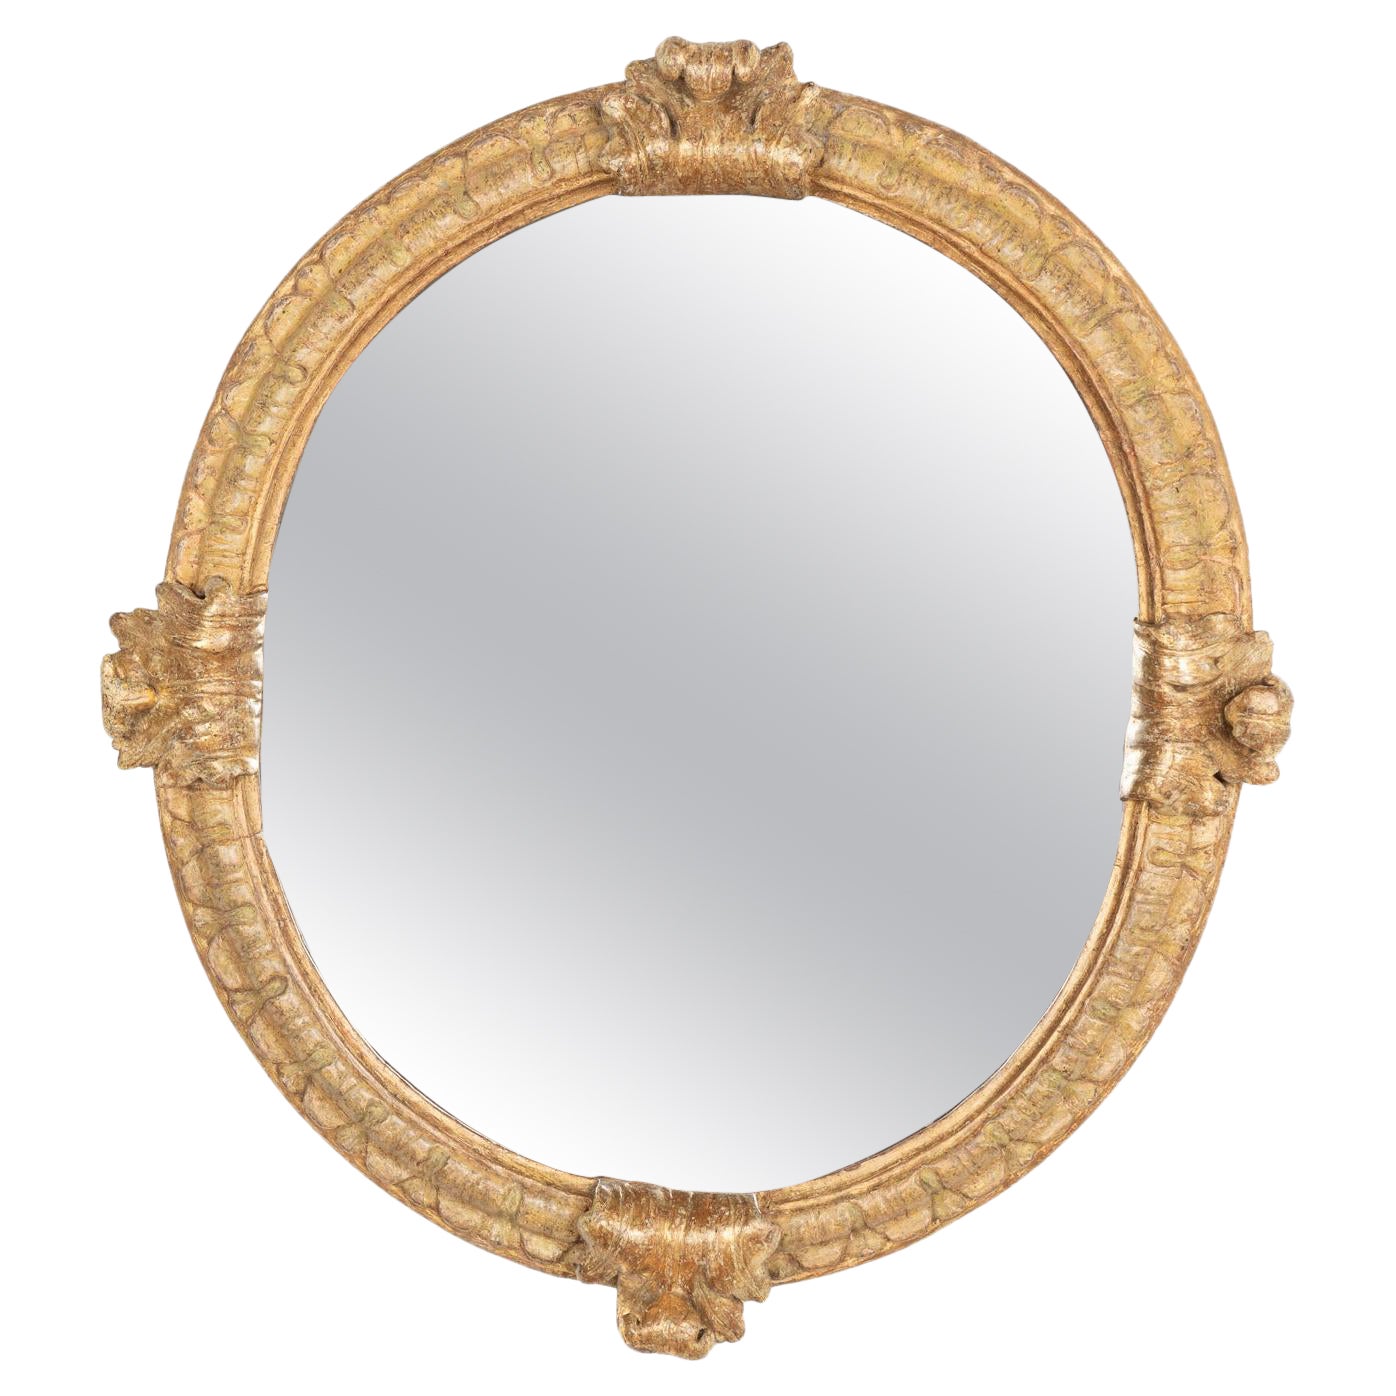 Antique Oval Gold Gilt Mirror, Sweden circa 1820-40 For Sale